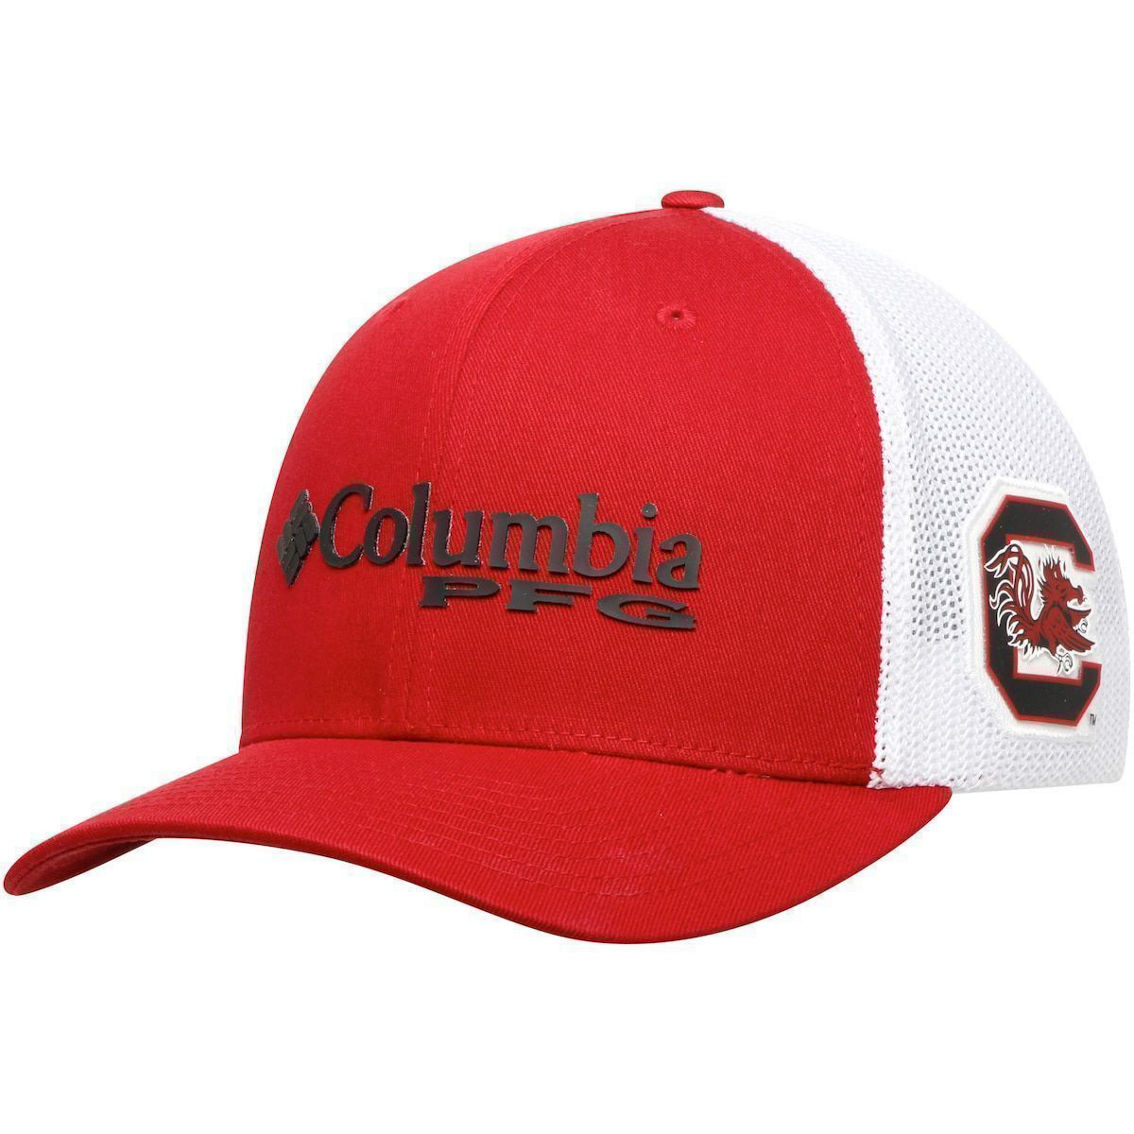 Men's Columbia Garnet South Carolina Gamecocks Collegiate PFG Flex Hat - Image 2 of 4